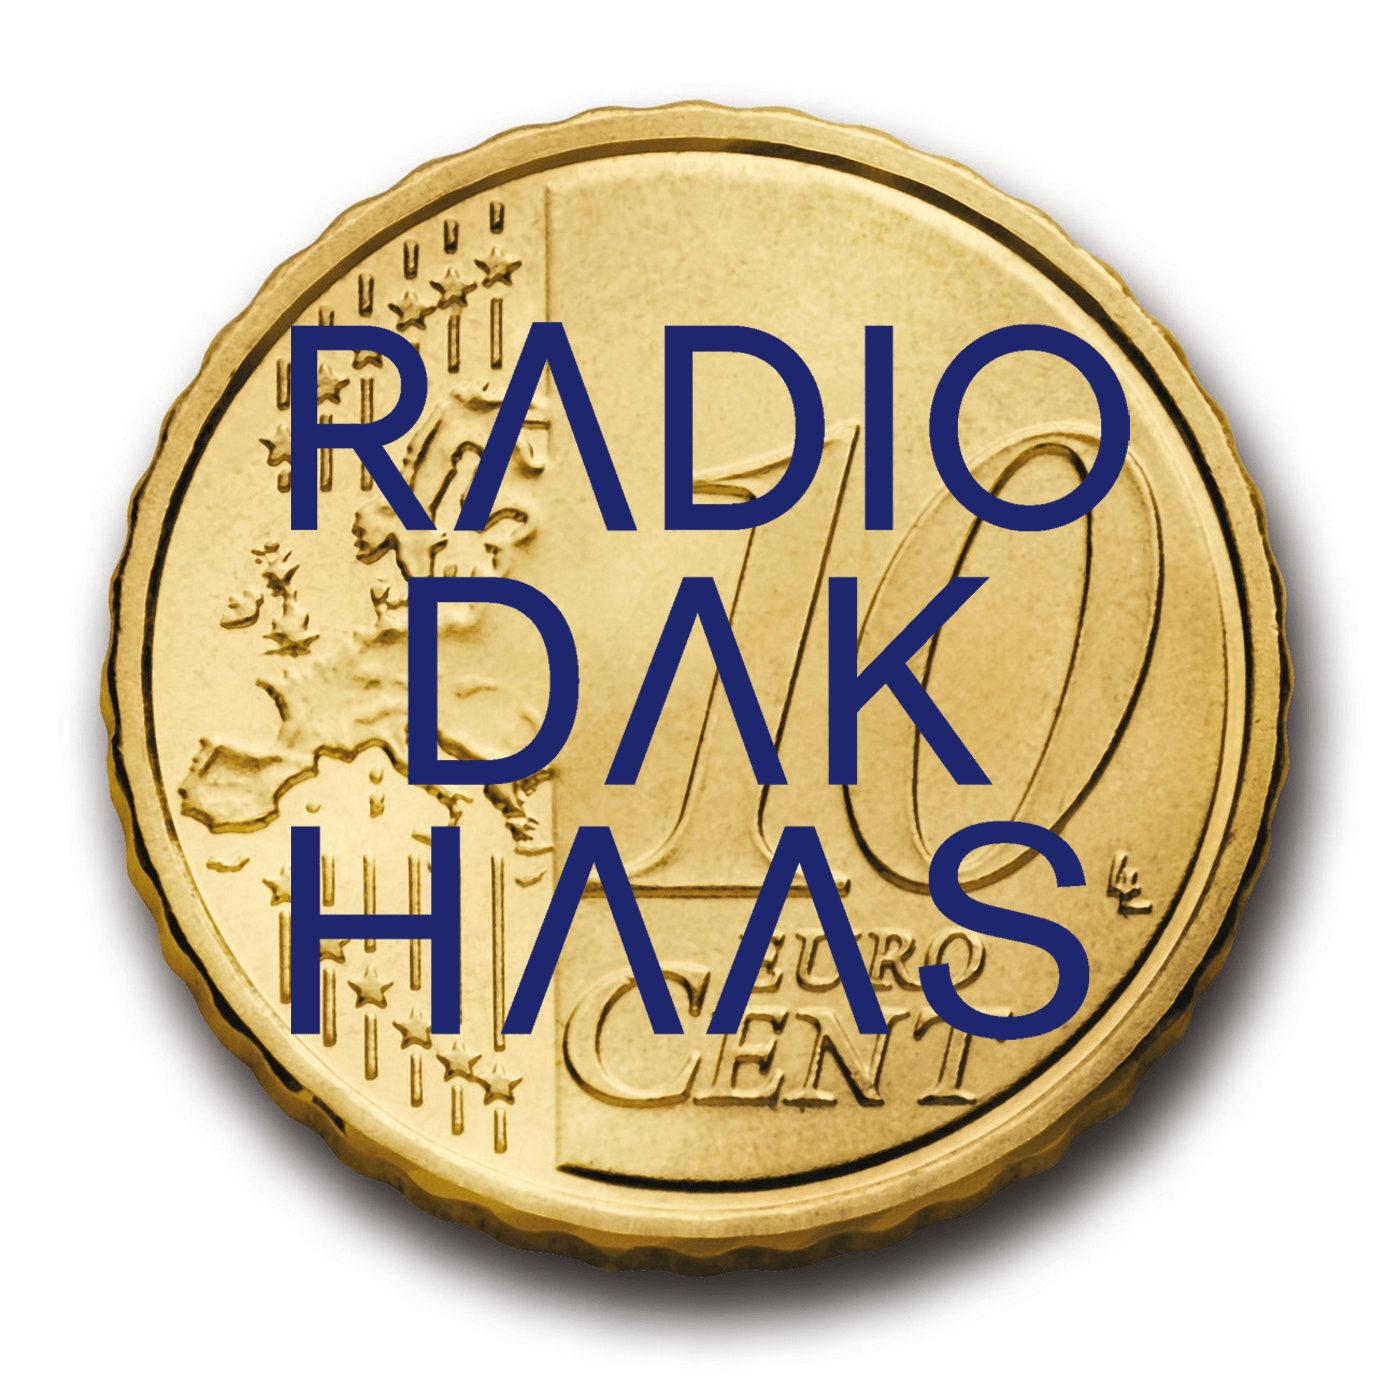 Radio Dakhaas De Toekomst 2: Je eigen straatnaam, implantaten, Het Kroegje en Tais Teng